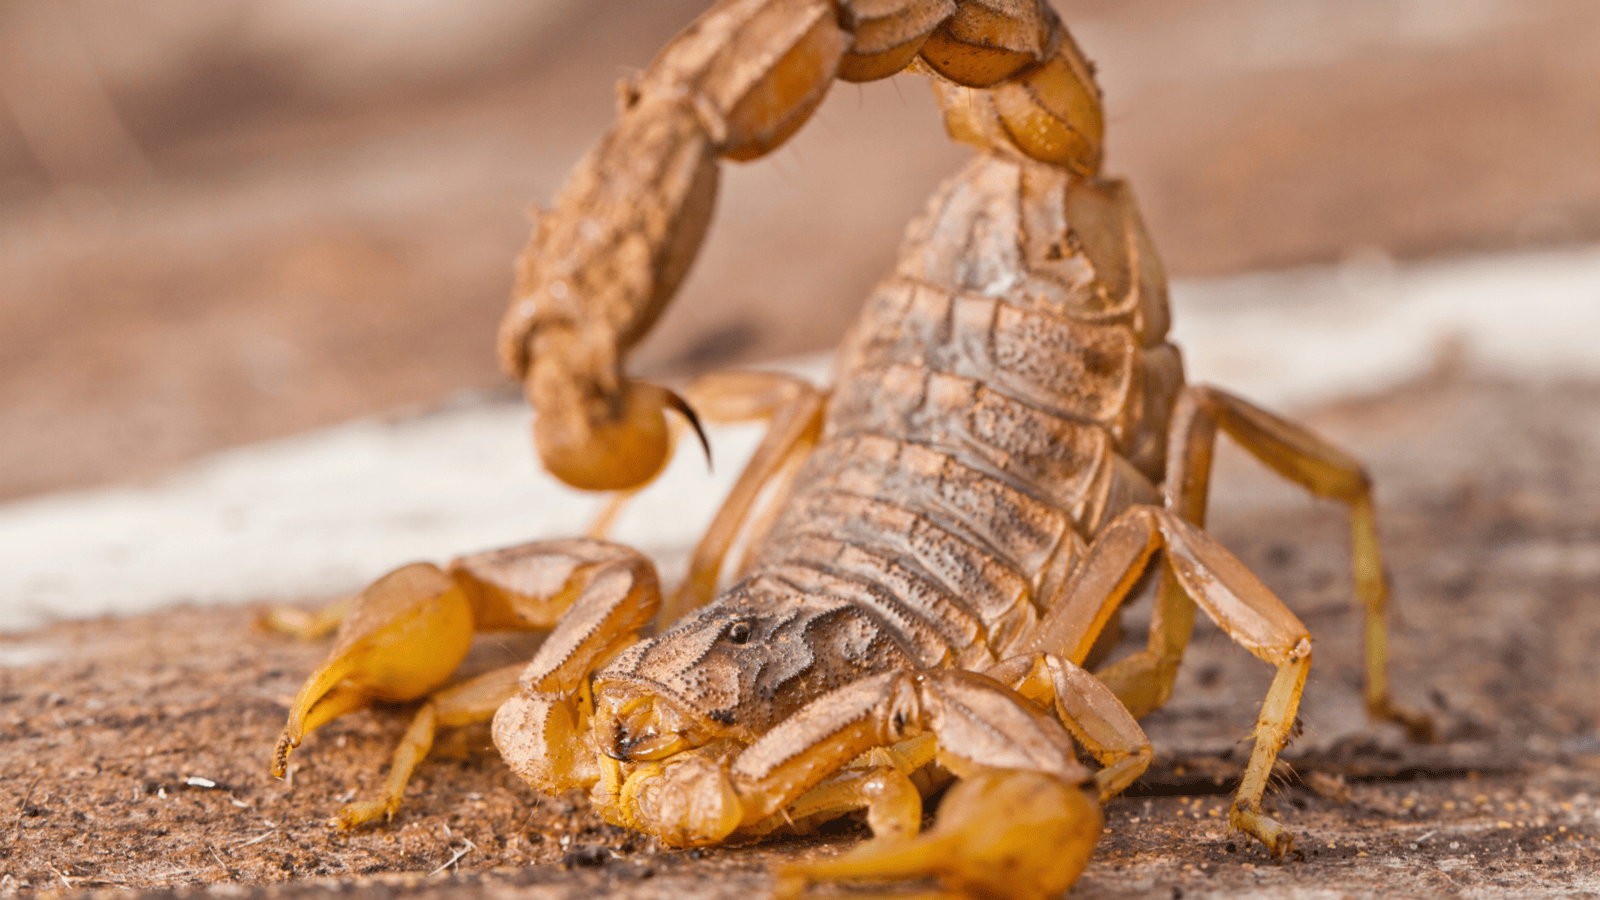 The Scorpion Kingdom: scorpions of the Karoo